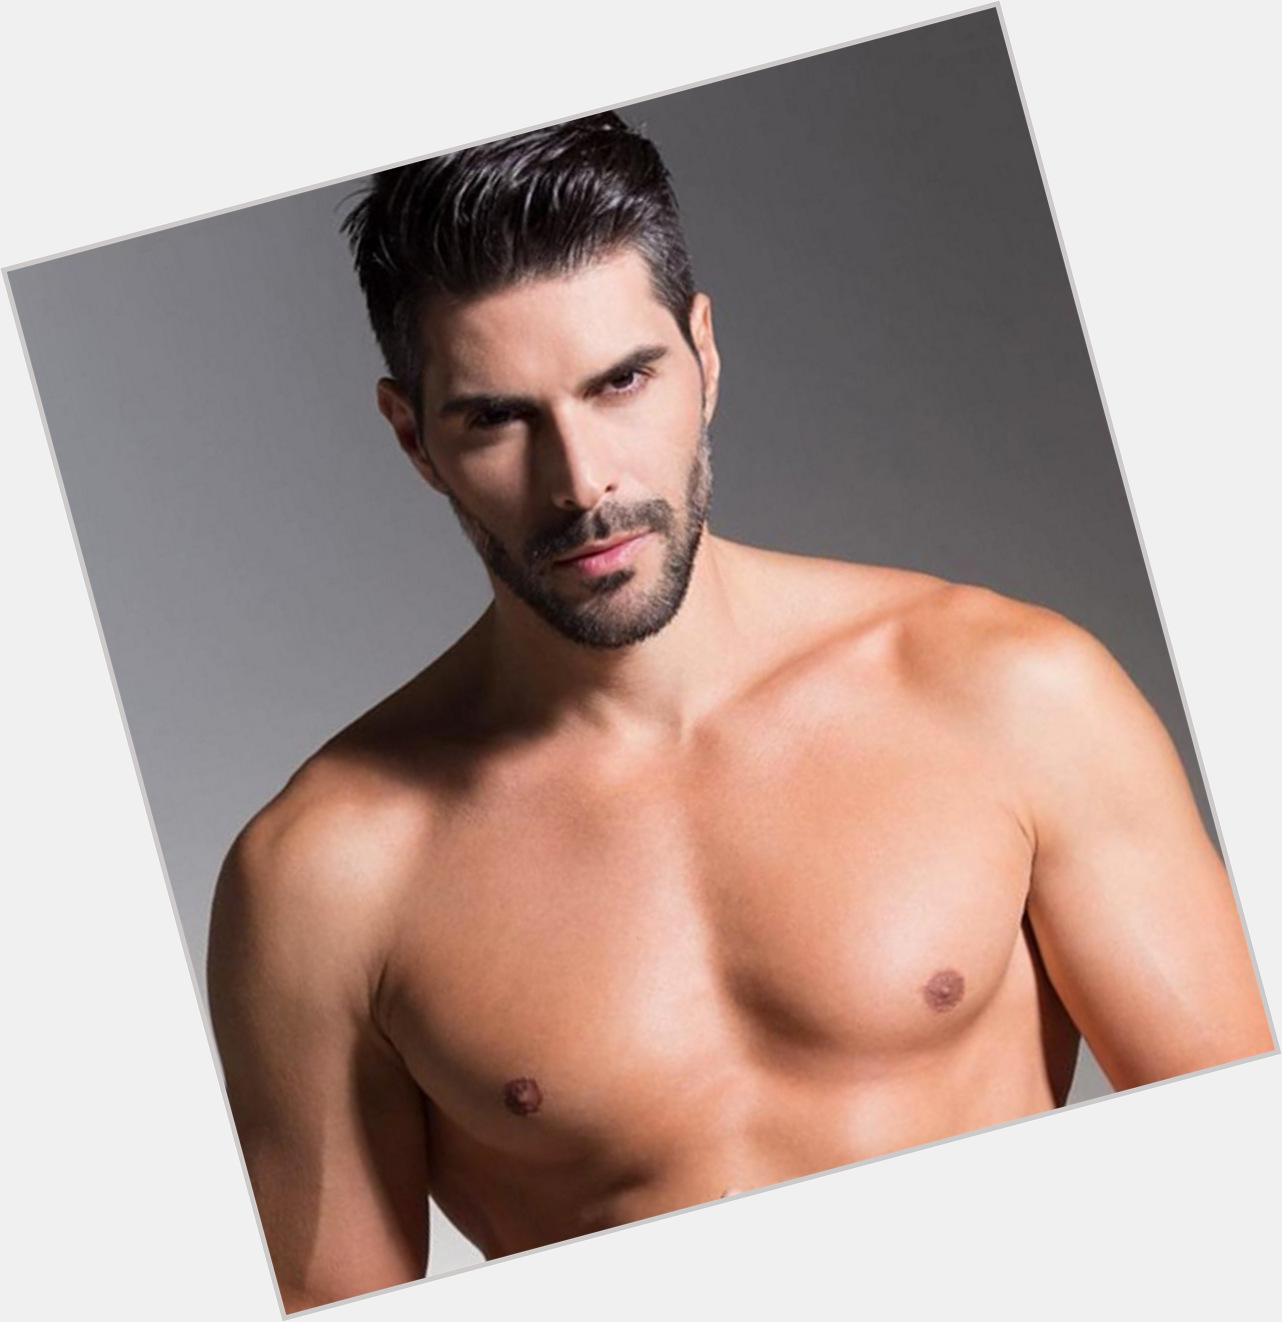 <a href="/hot-men/juan-pablo-llano/is-he-bi-2014">Juan Pablo Llano</a> Athletic body,  dark brown hair & hairstyles